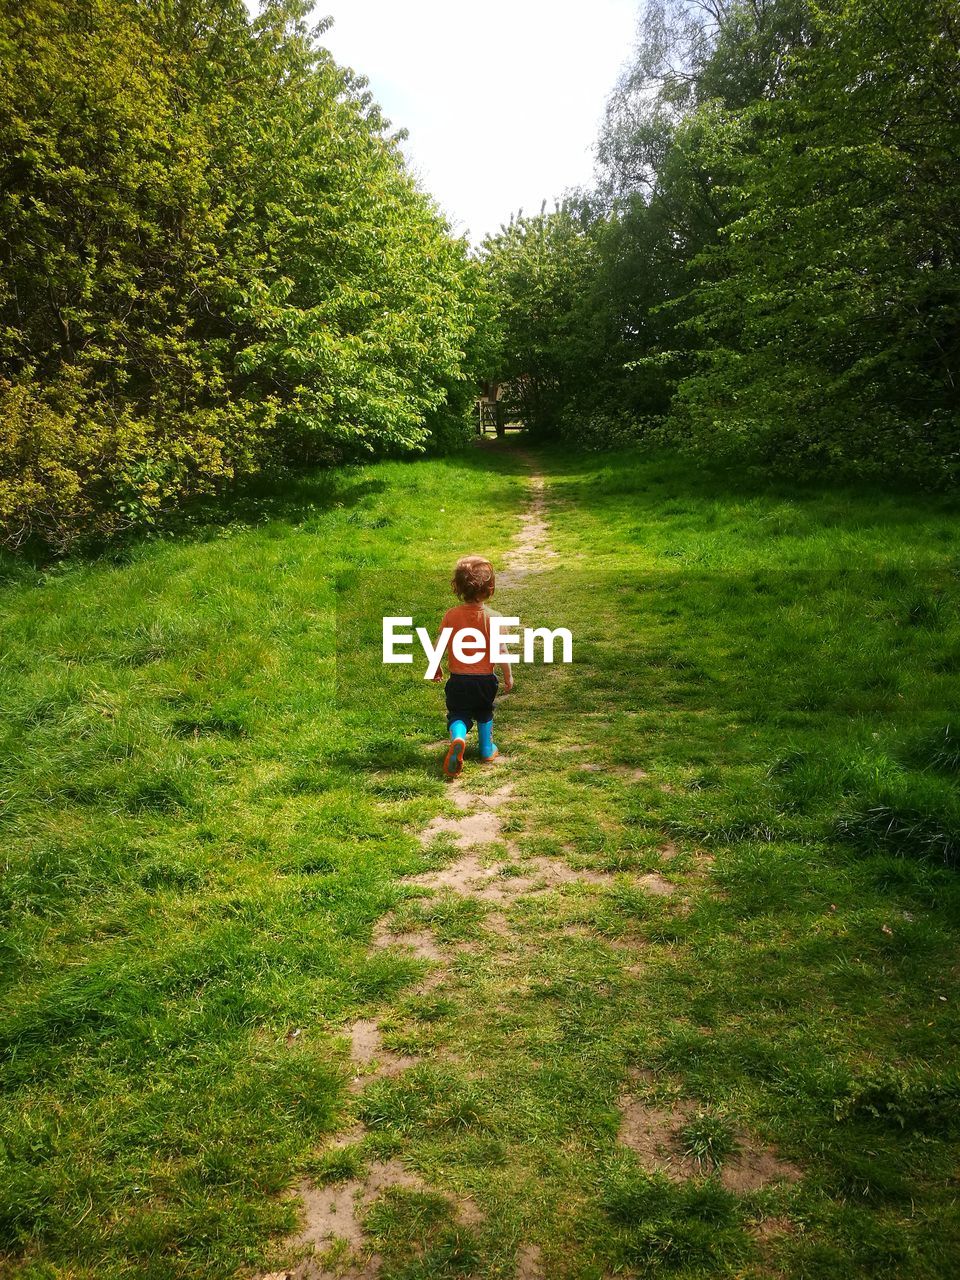 Rear view of boy walking on trail amidst grassy field